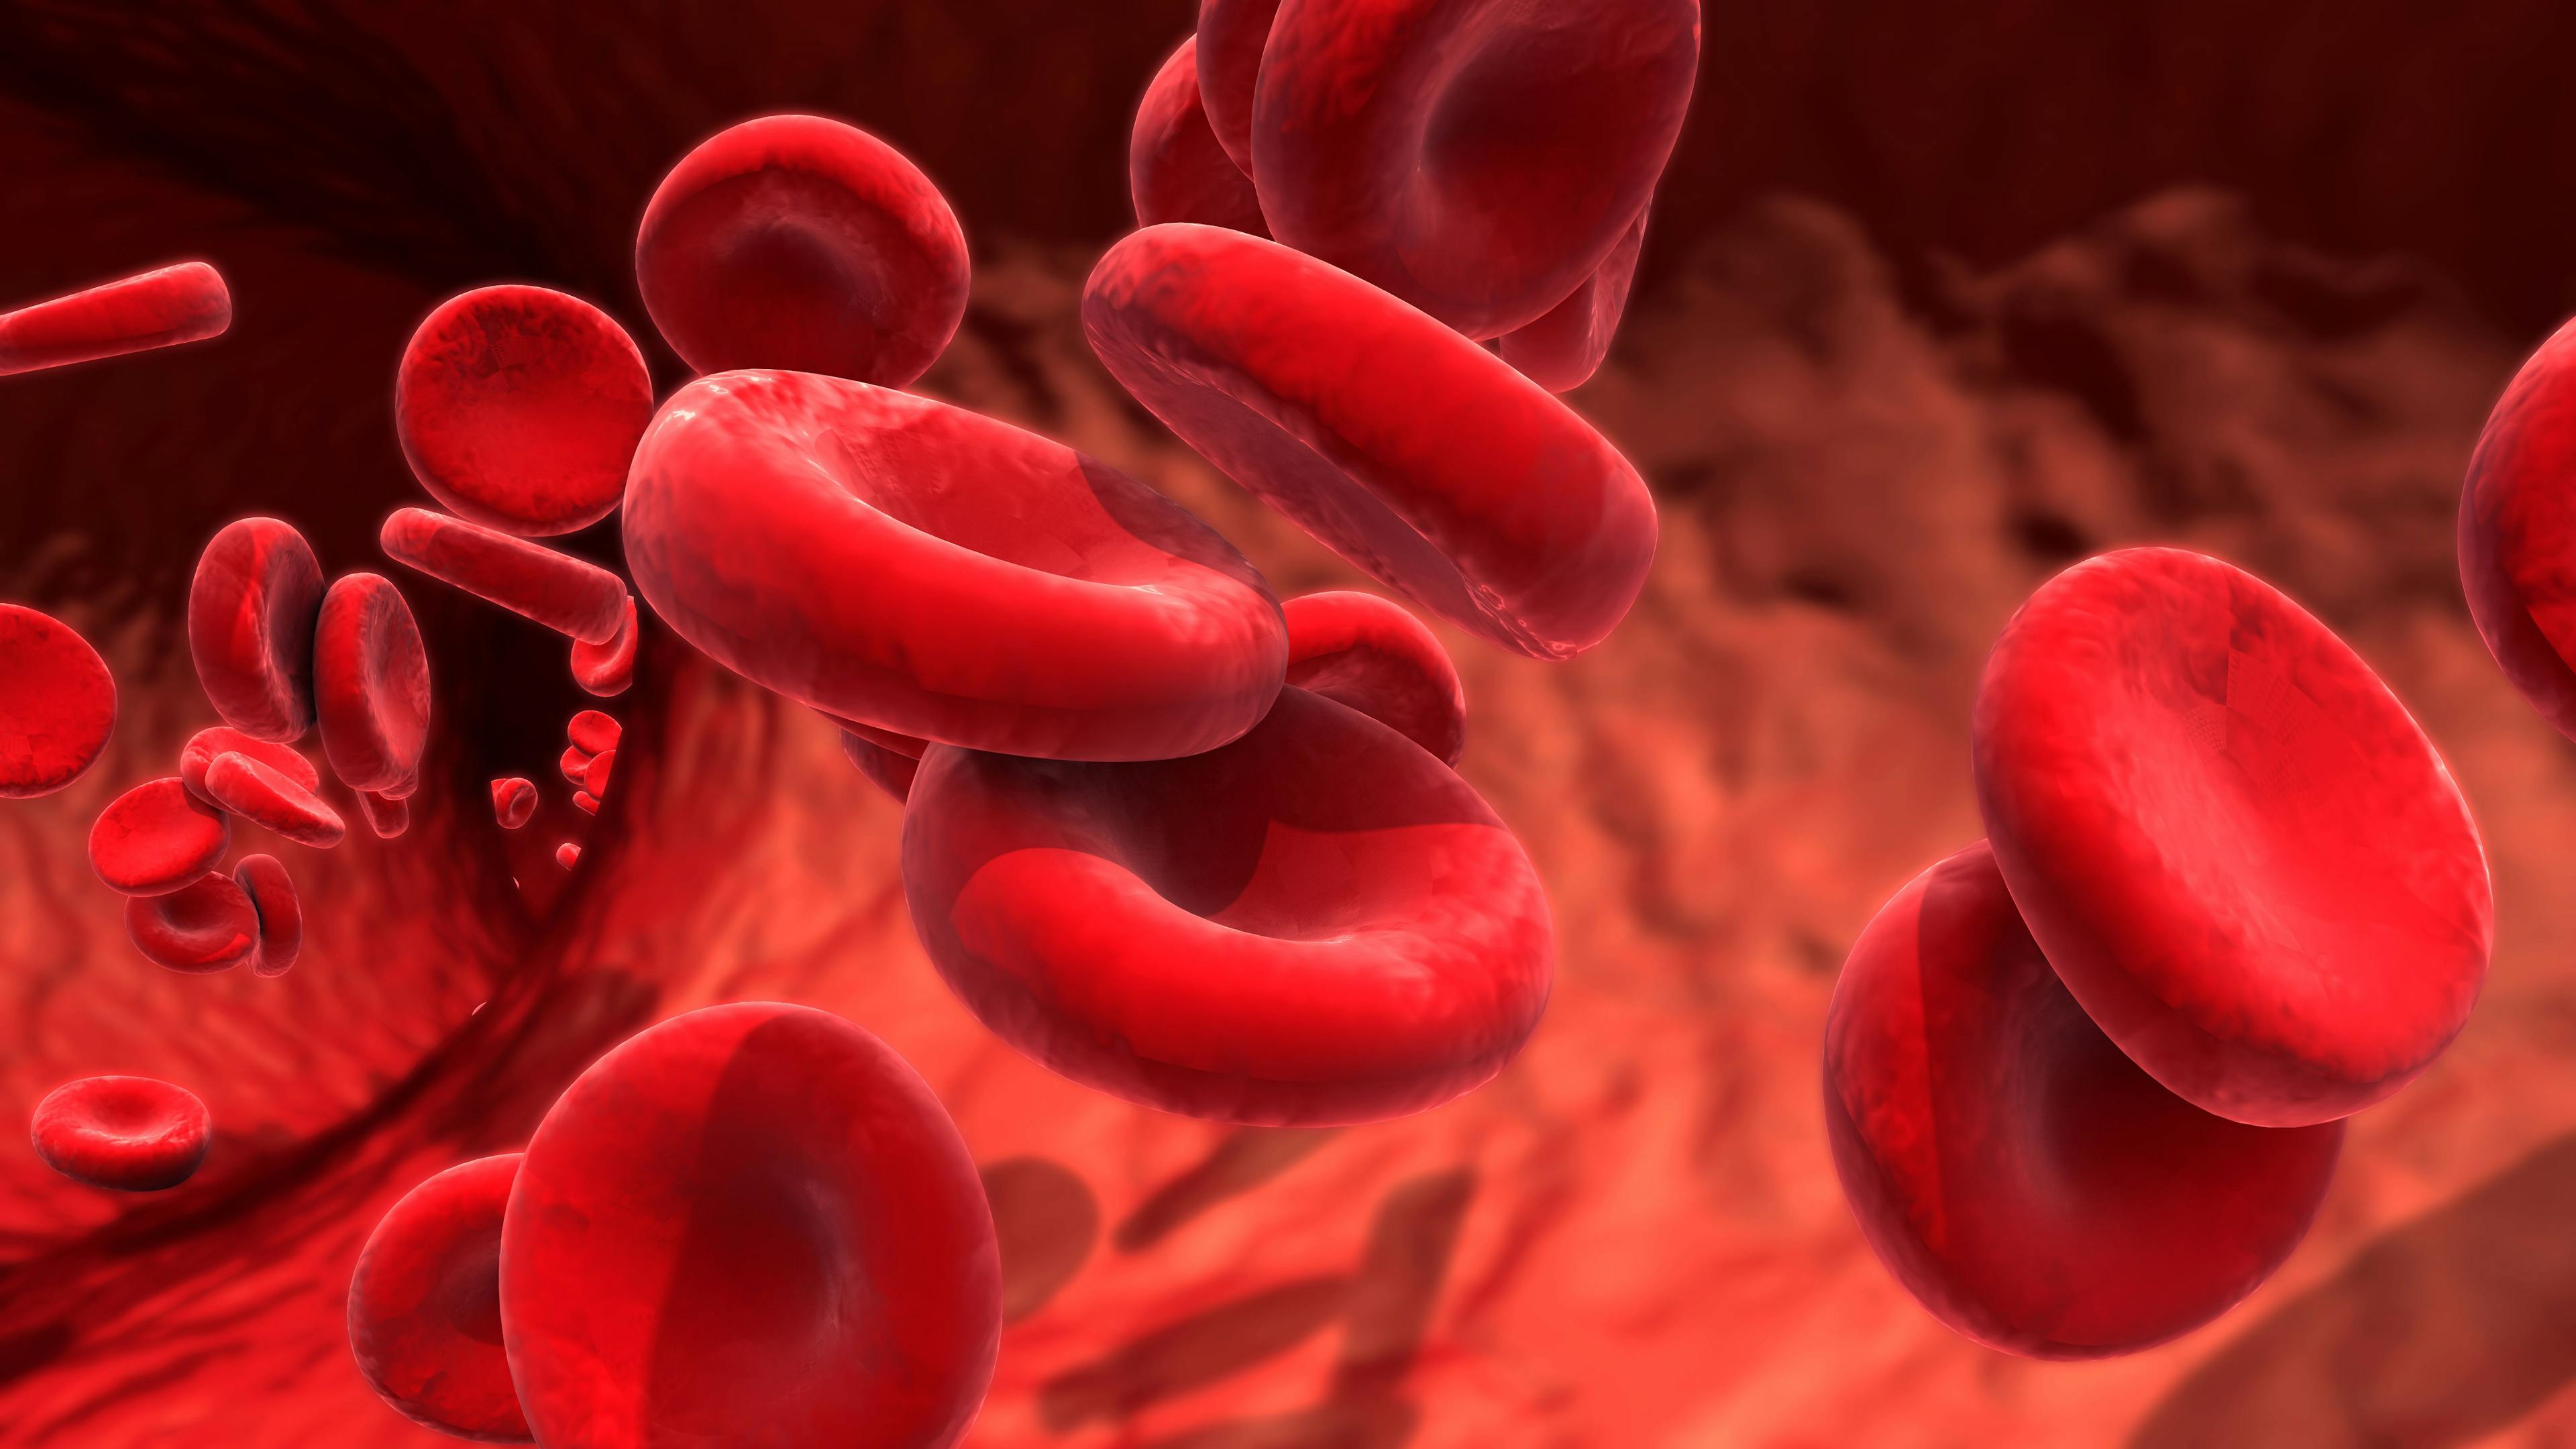 Red Blood Cells - Design Cells stock.adobe.com